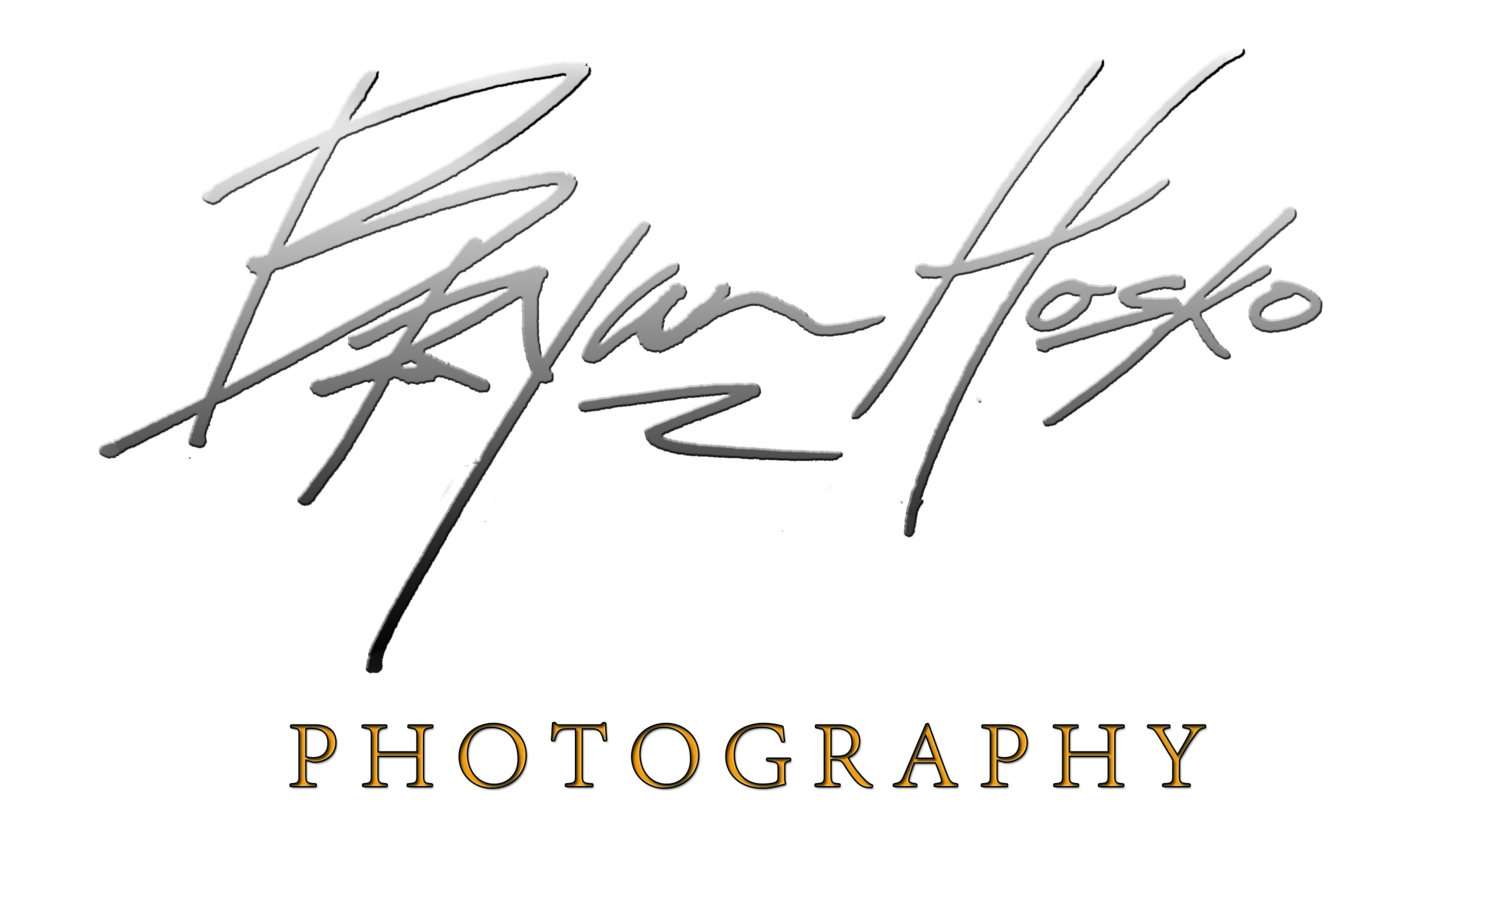 Bryan Hosko Photography